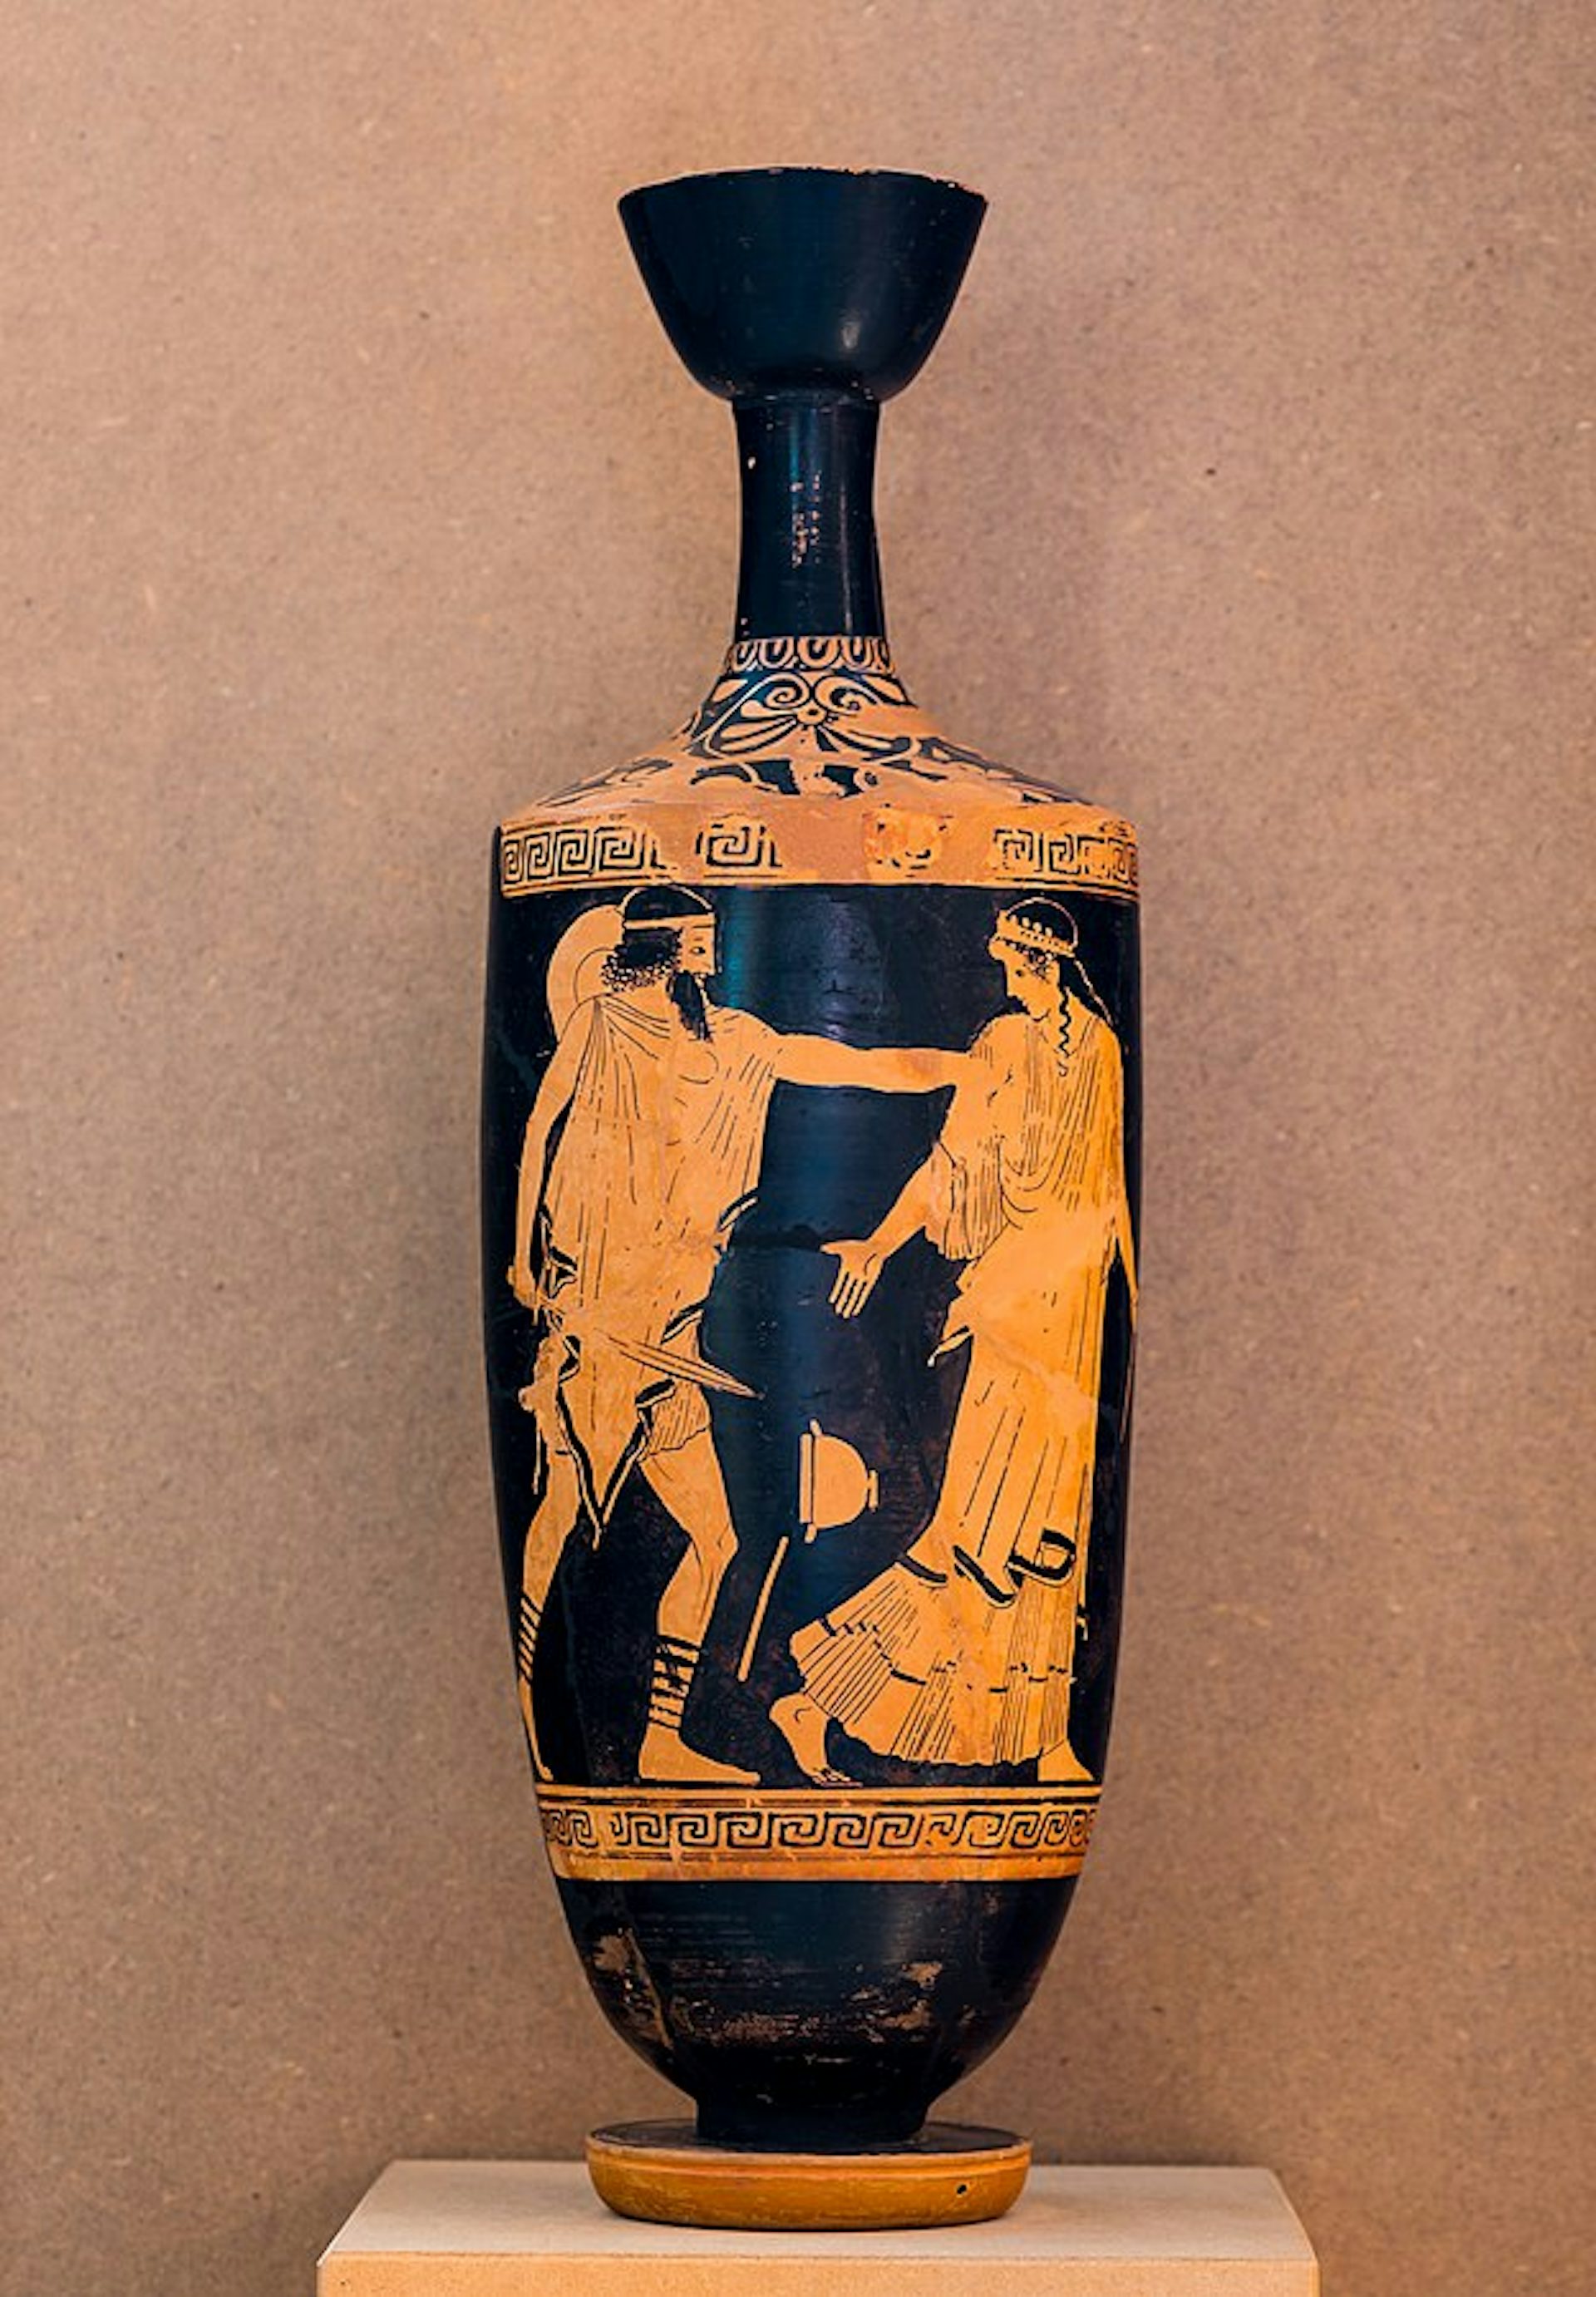 Vase painting of Odysseus threatening Circe by the Nikon Painter